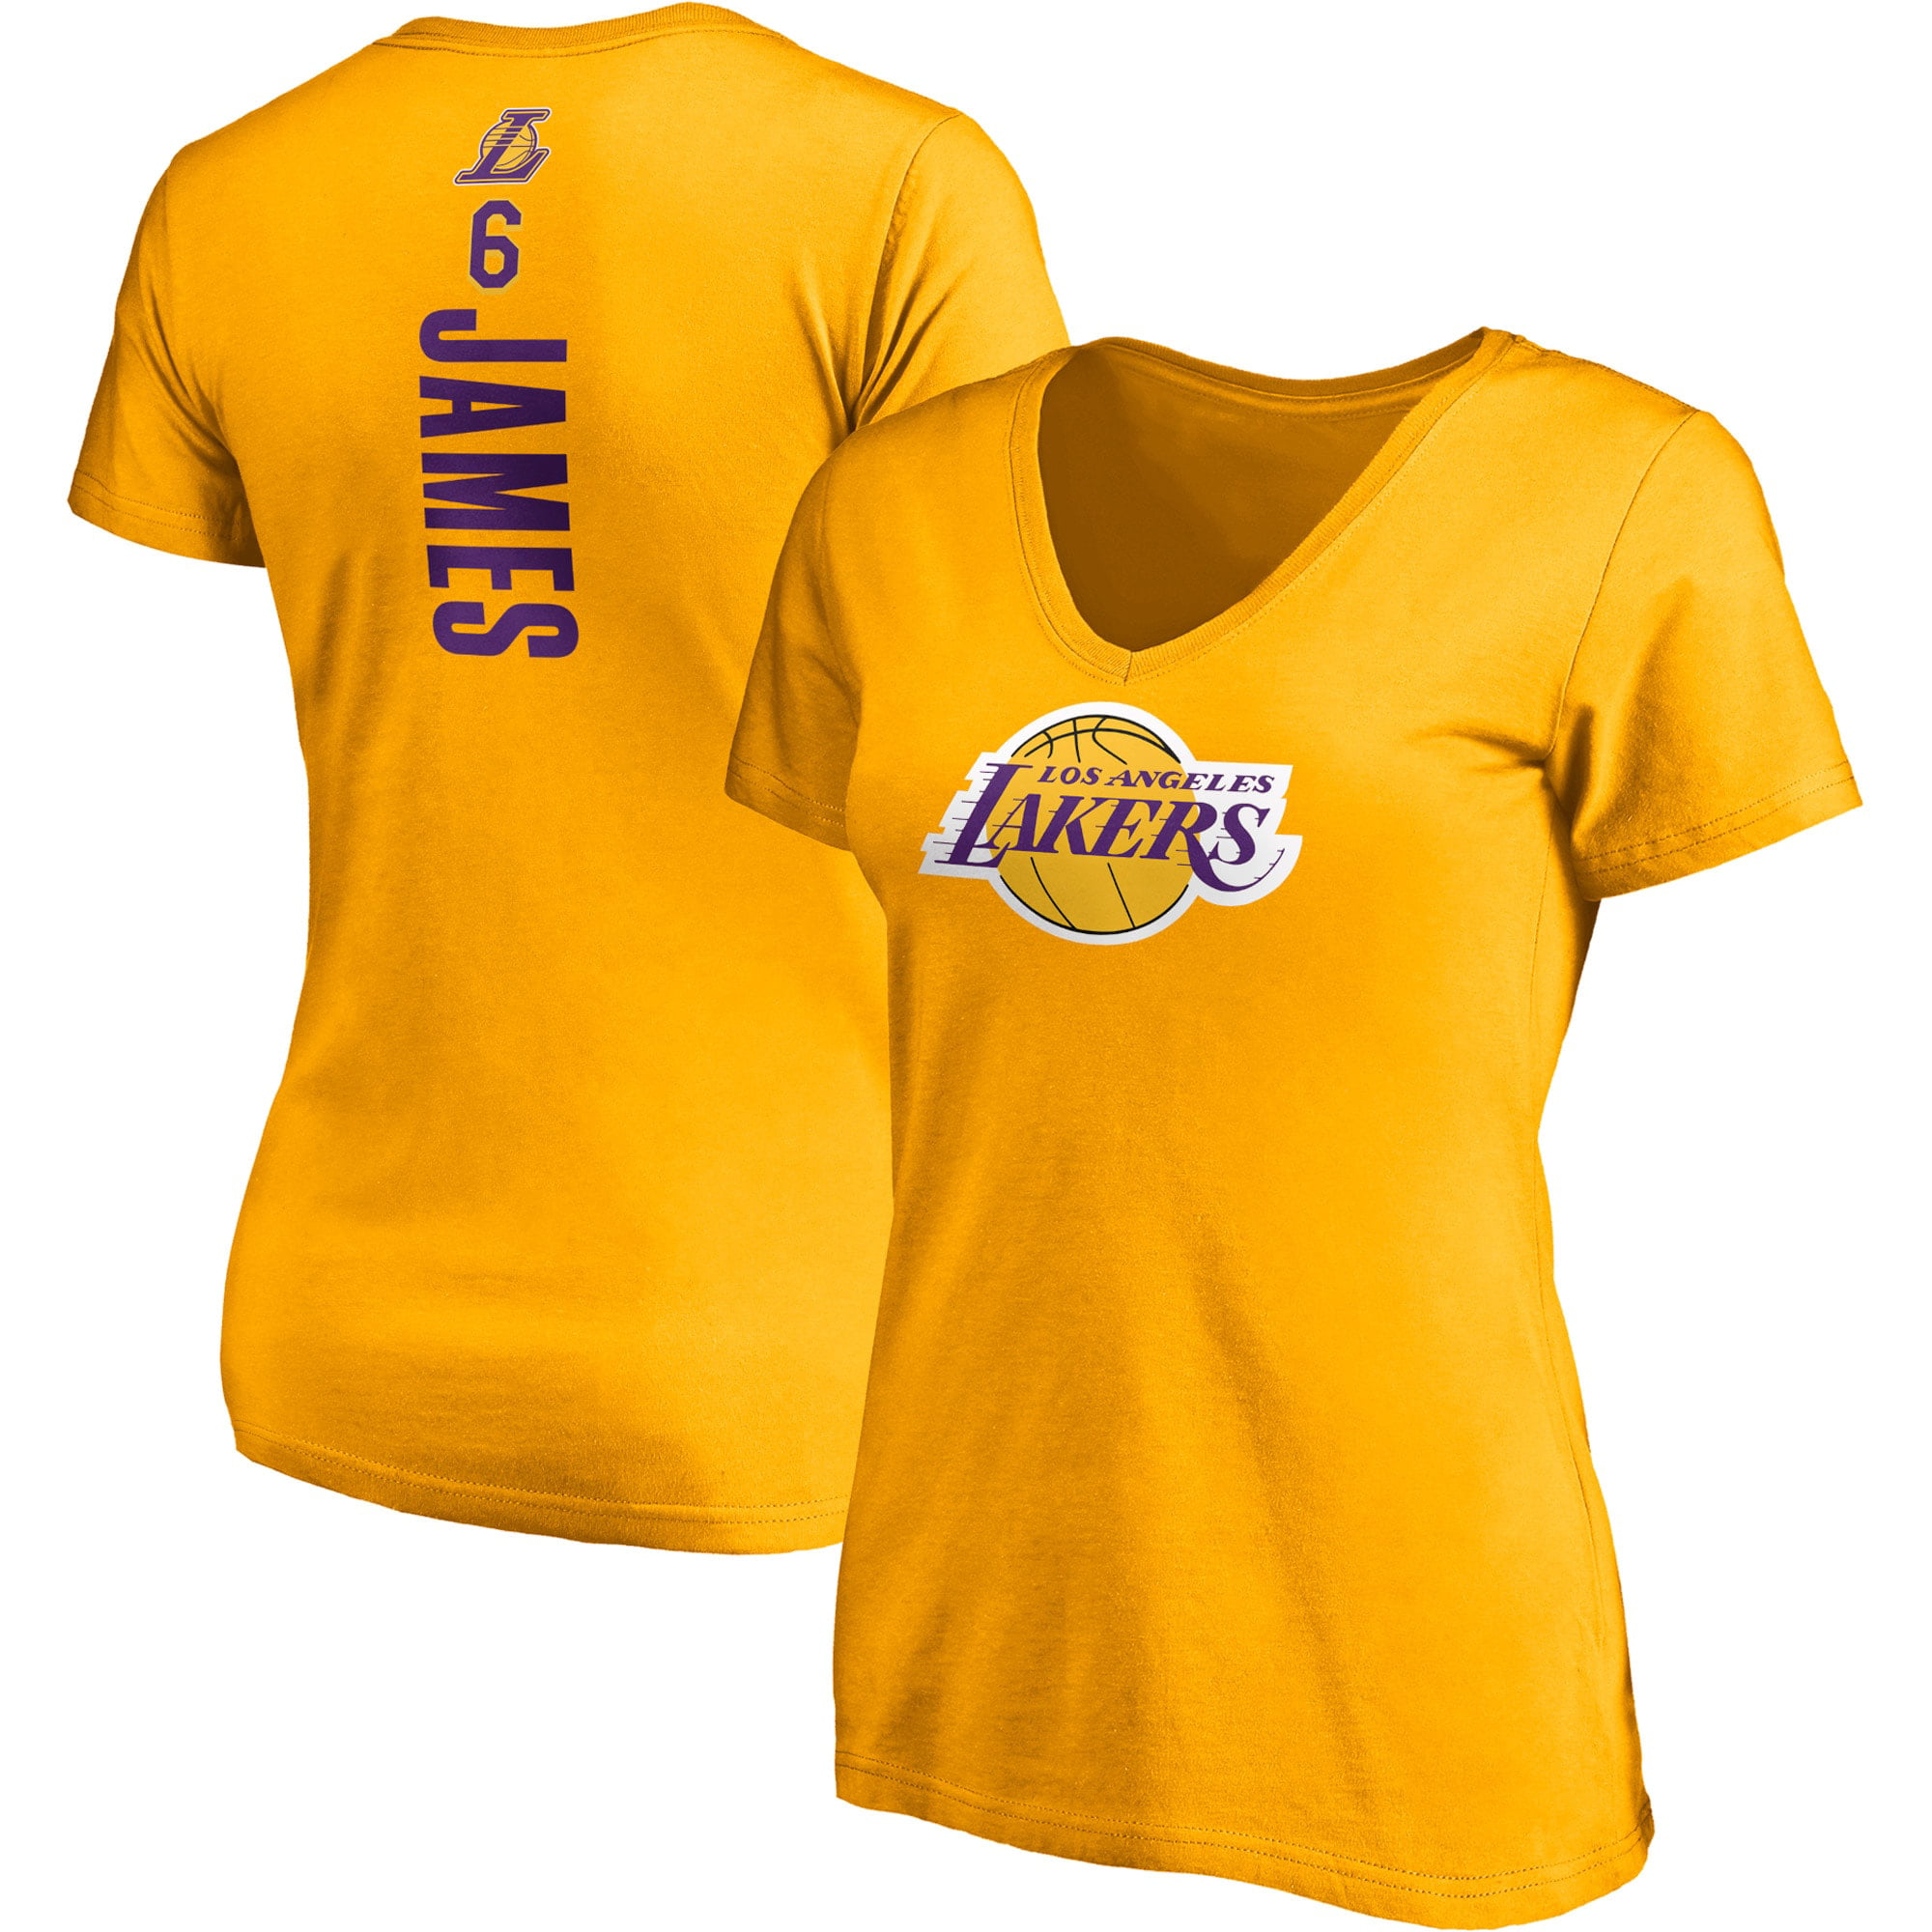 NBA Lakers logo t-shirt